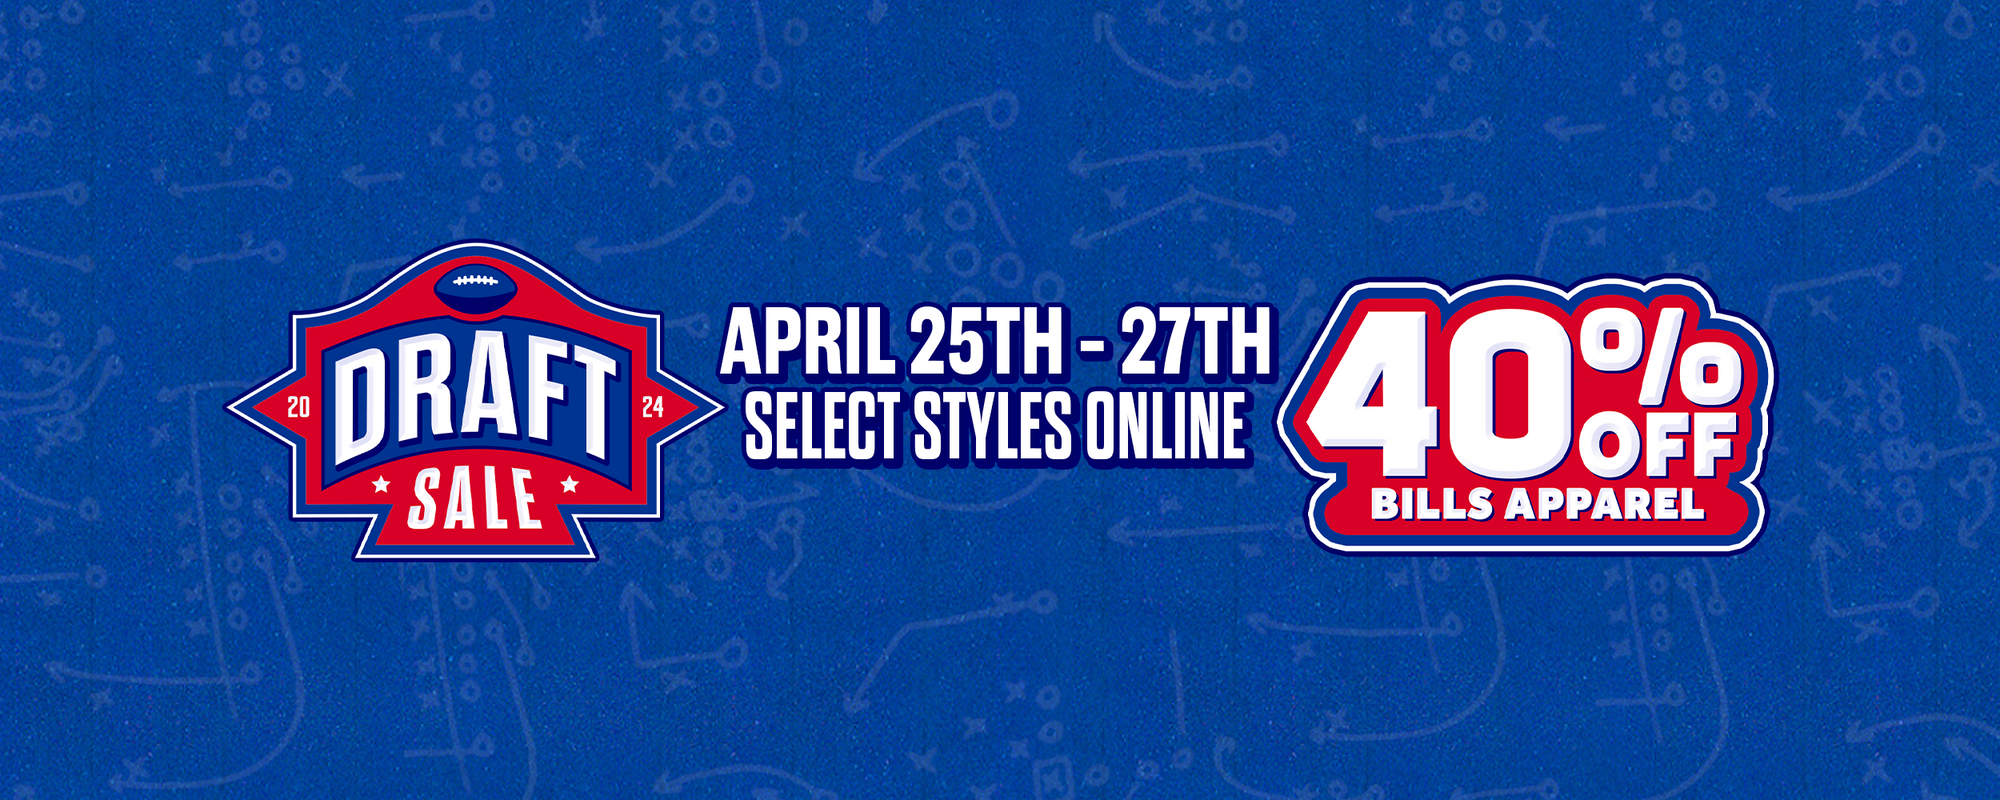 draft sale april 25-27 select styles online 40% off bills apparel